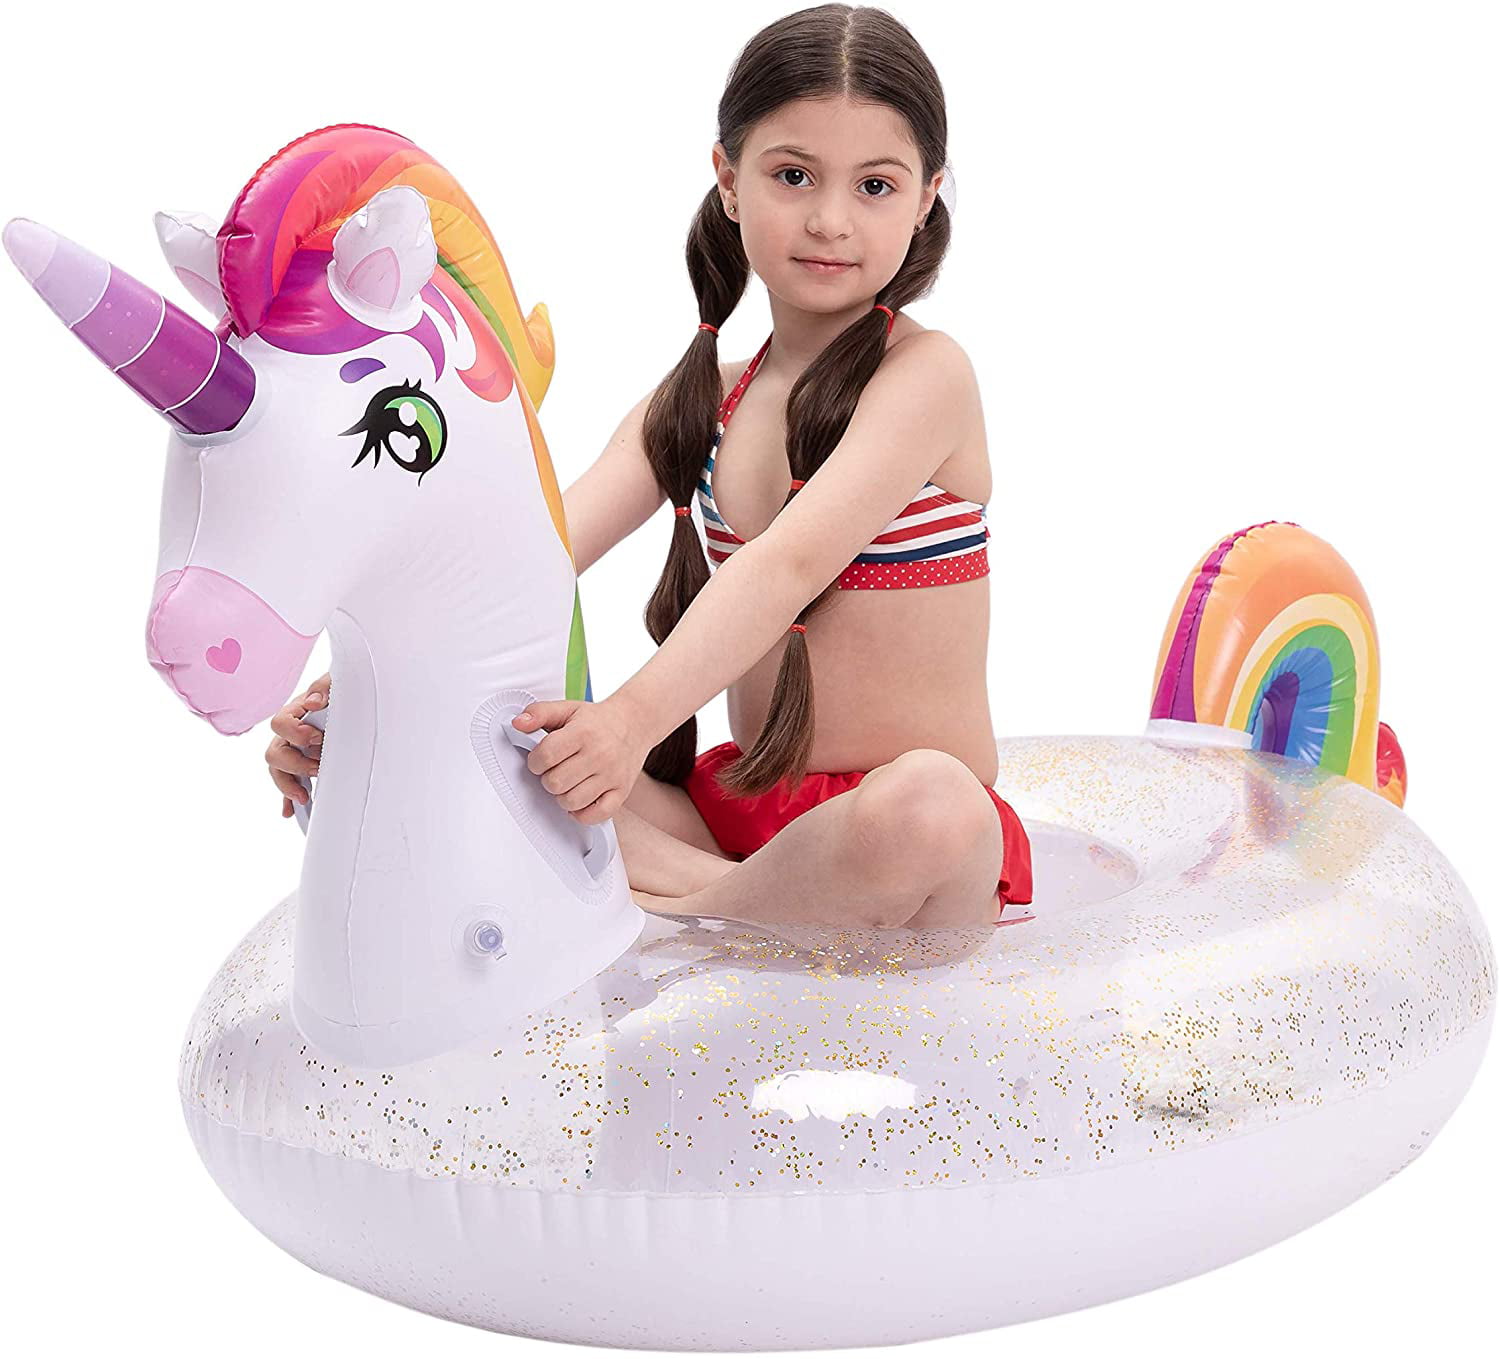 Unicorn Inflatable Swim Pool Floats Raft Swimming Fun Kids Water Sport Beach Toy 